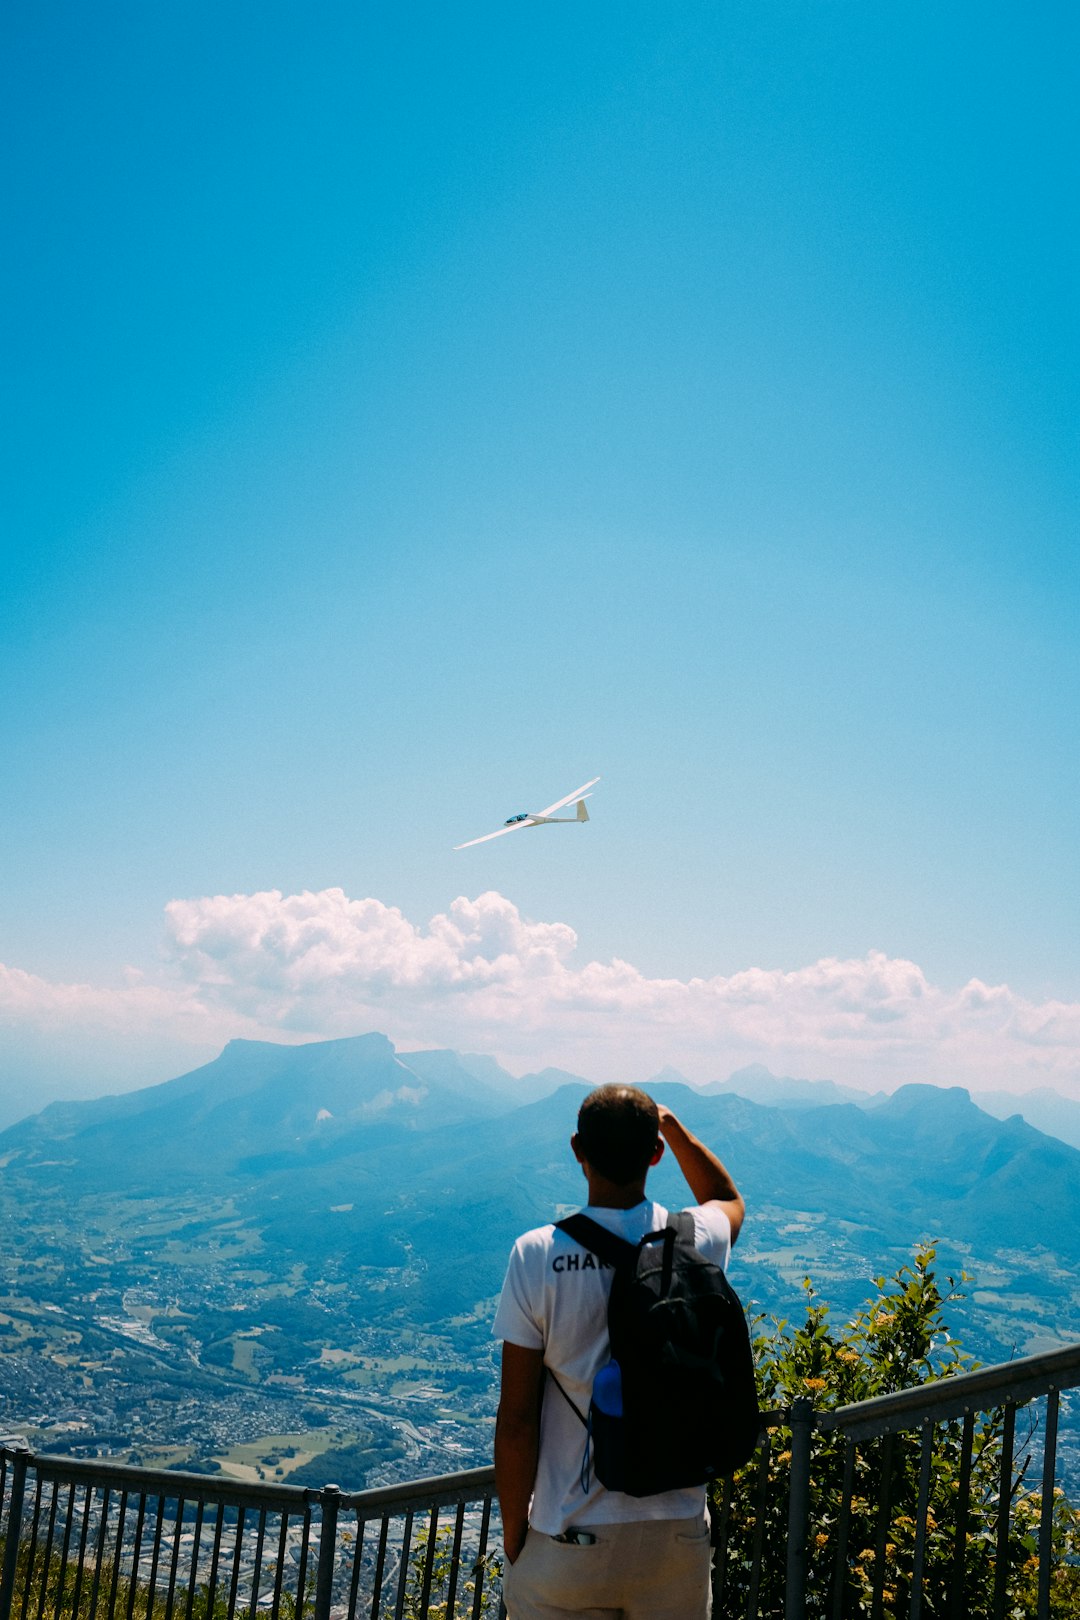 man in white shirt sitting on rock looking at white airplane